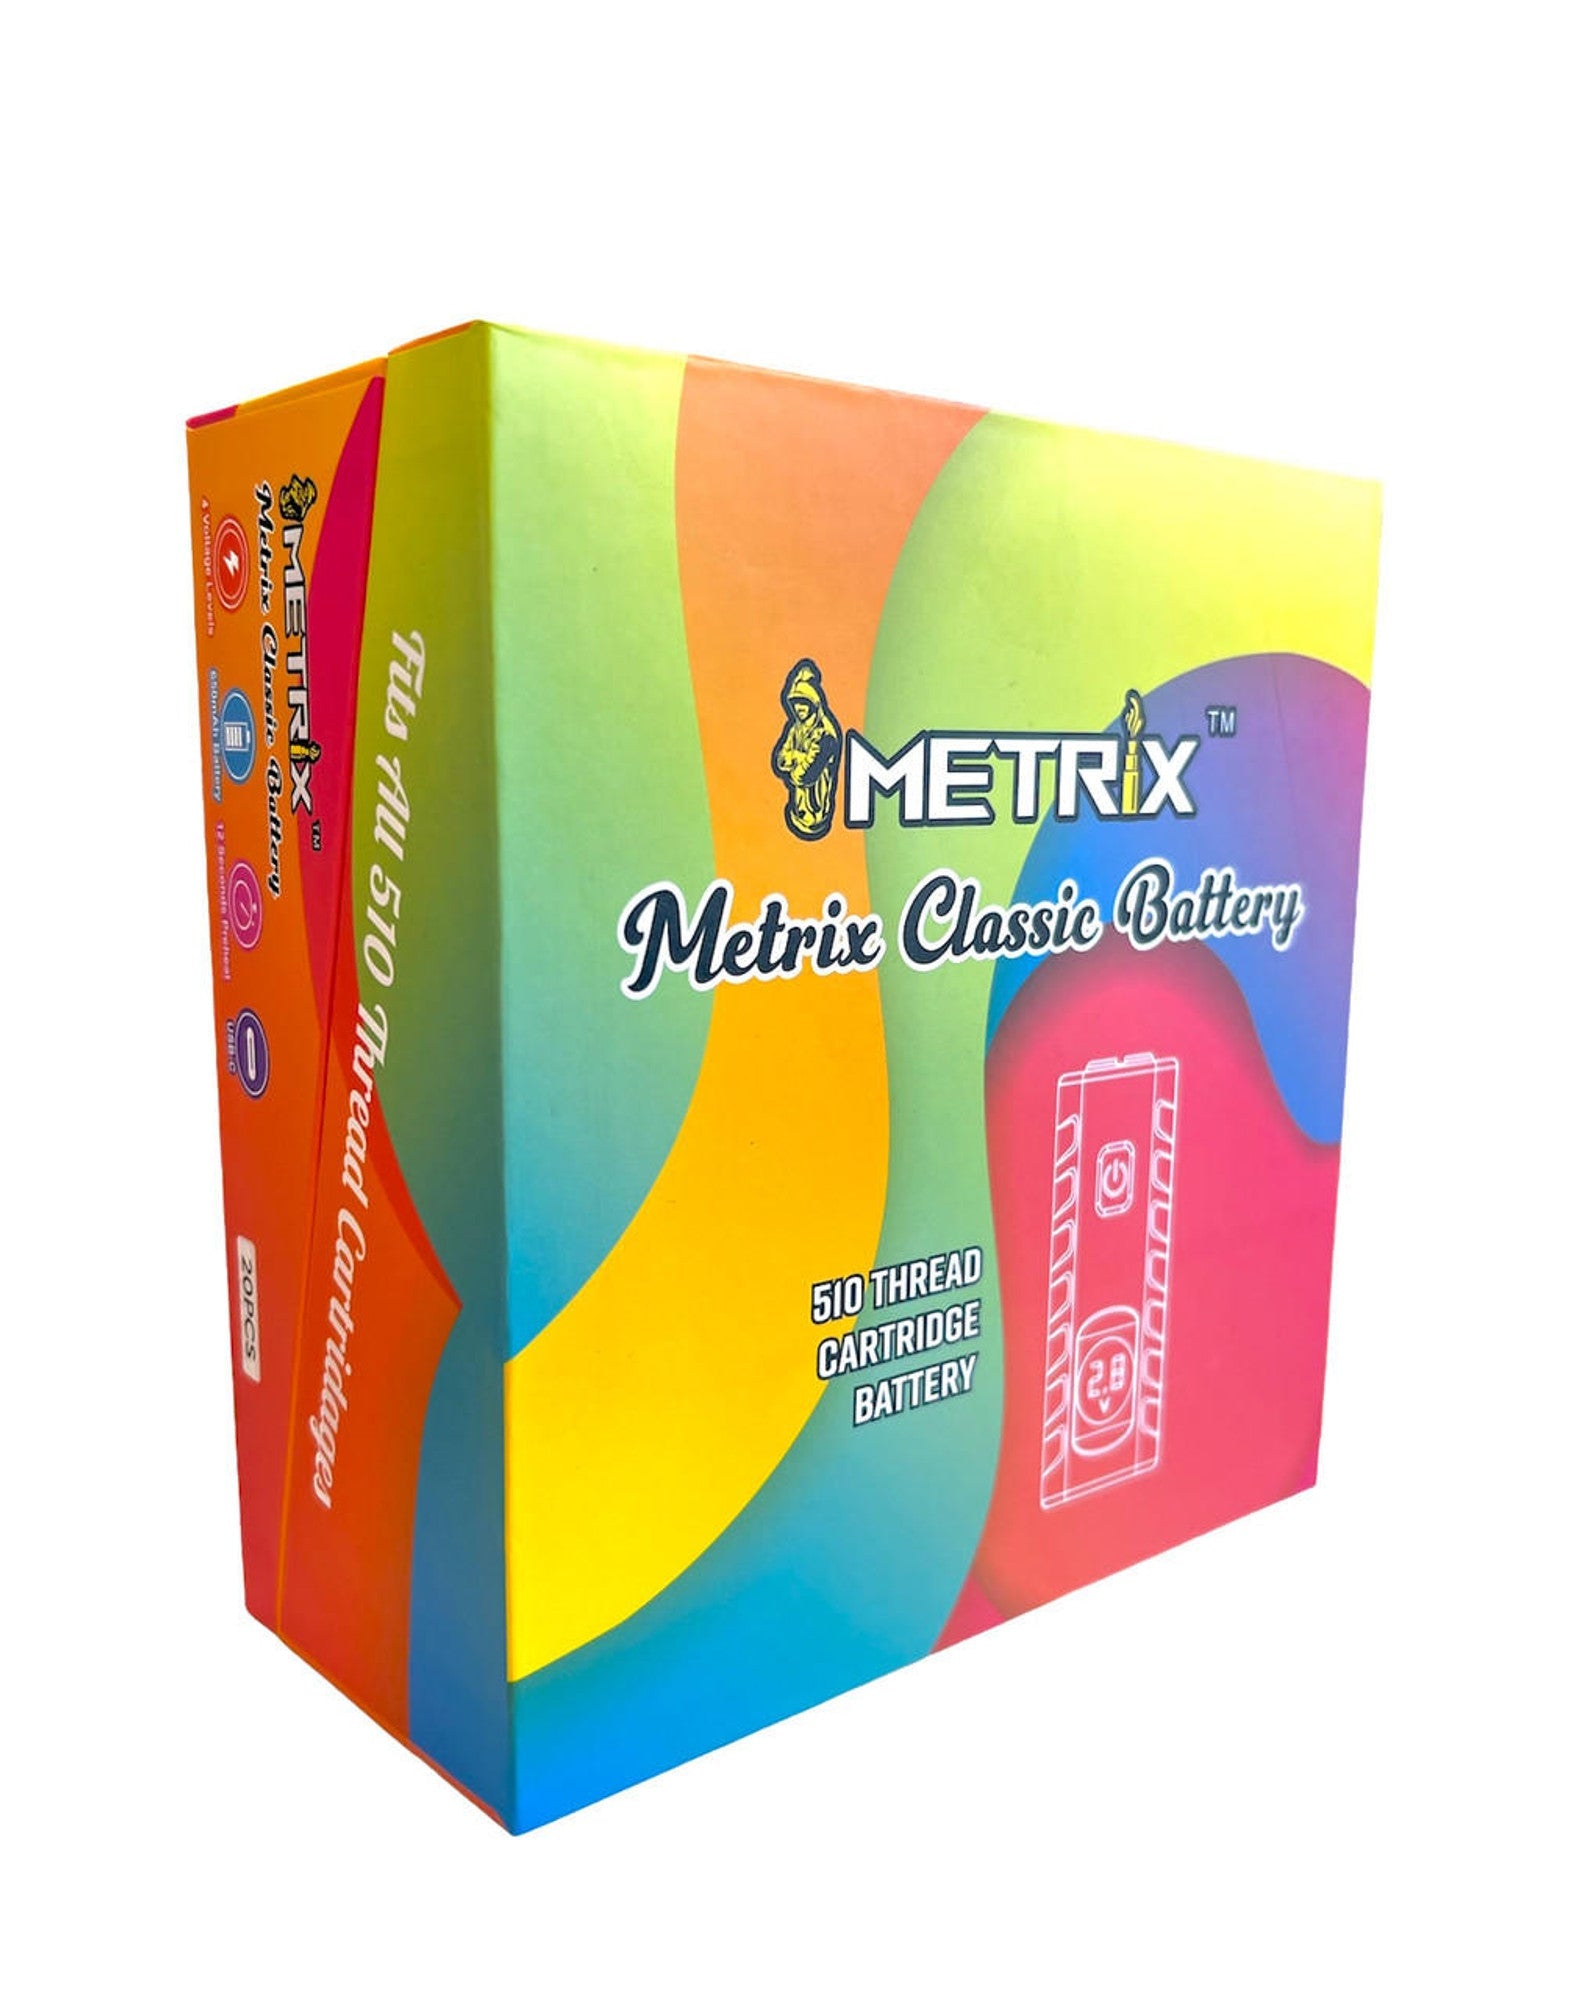 Metrix Classic Battery - Display of 20 - Single Piece